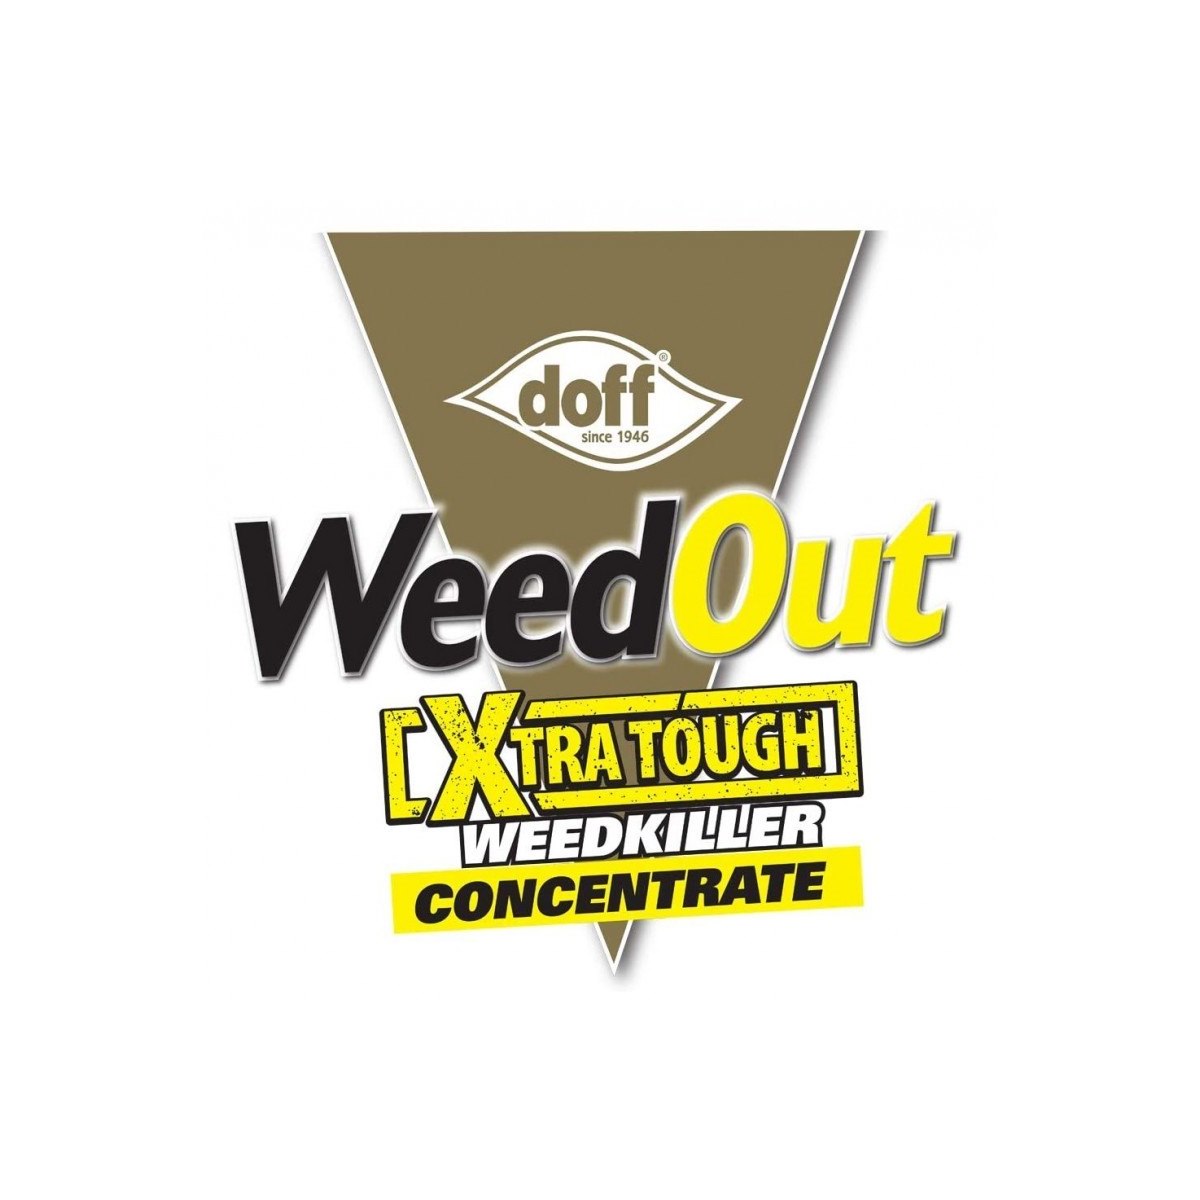 Where to Buy Doff Xtra Tough Weedkiller